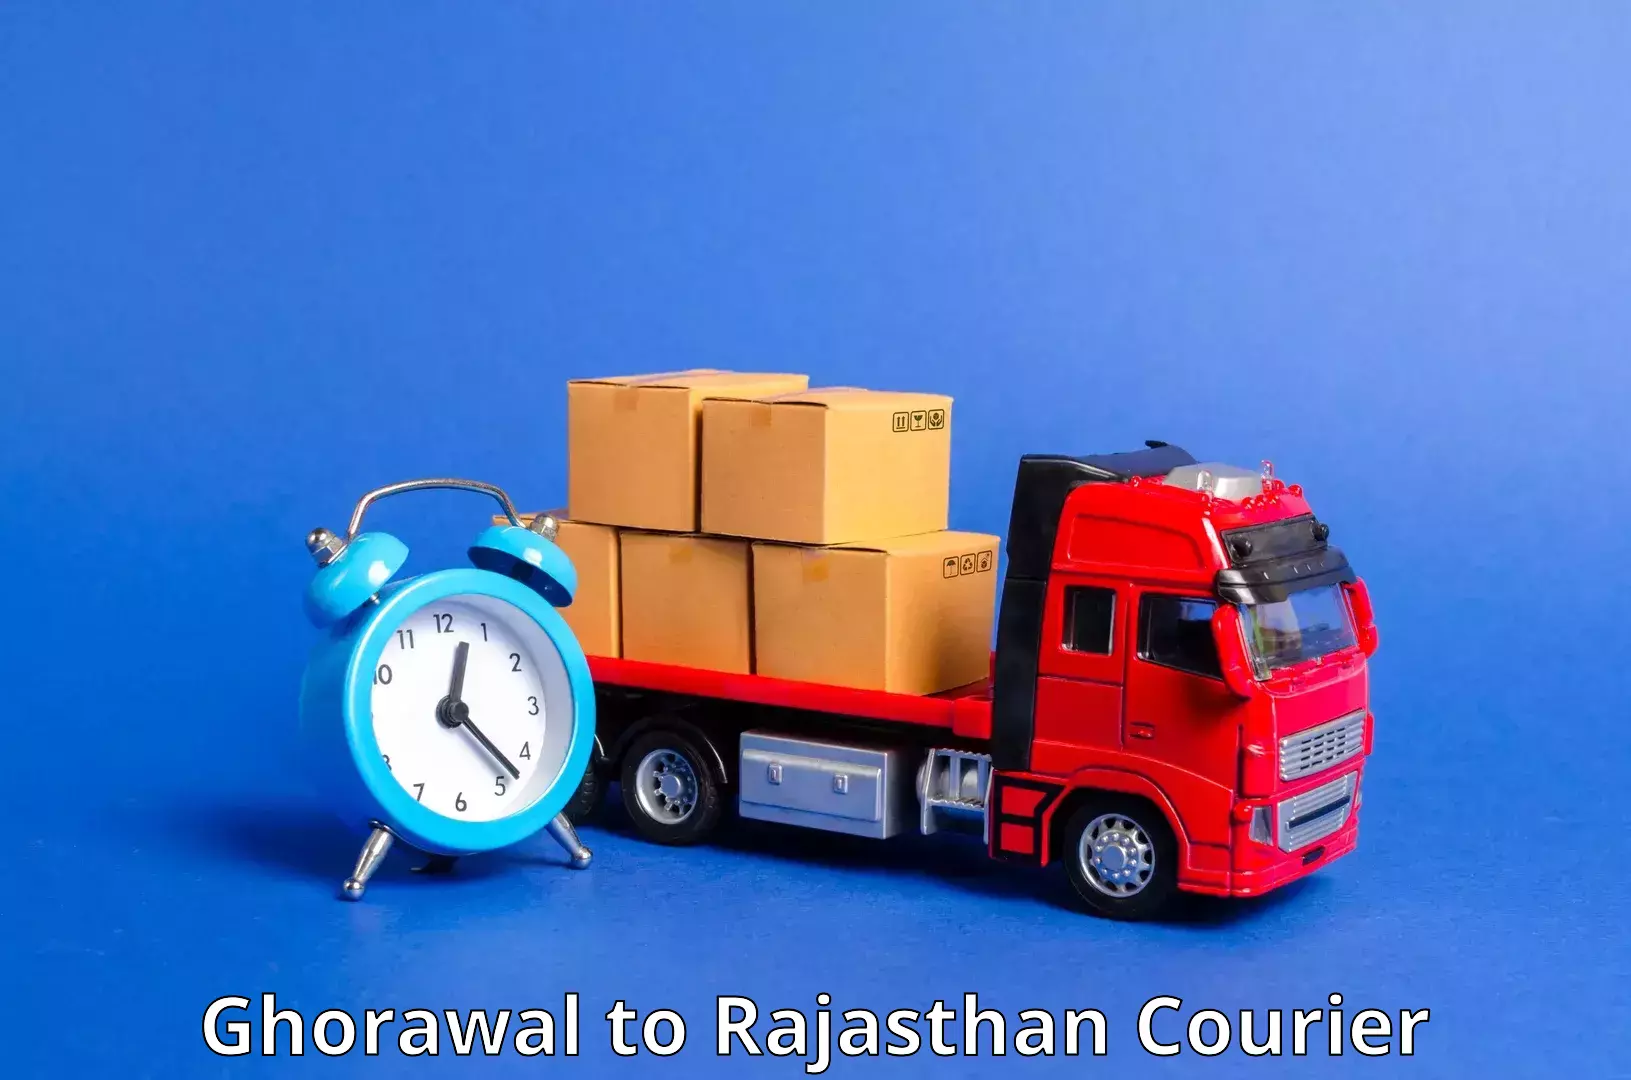 Doorstep delivery service Ghorawal to Chirawa